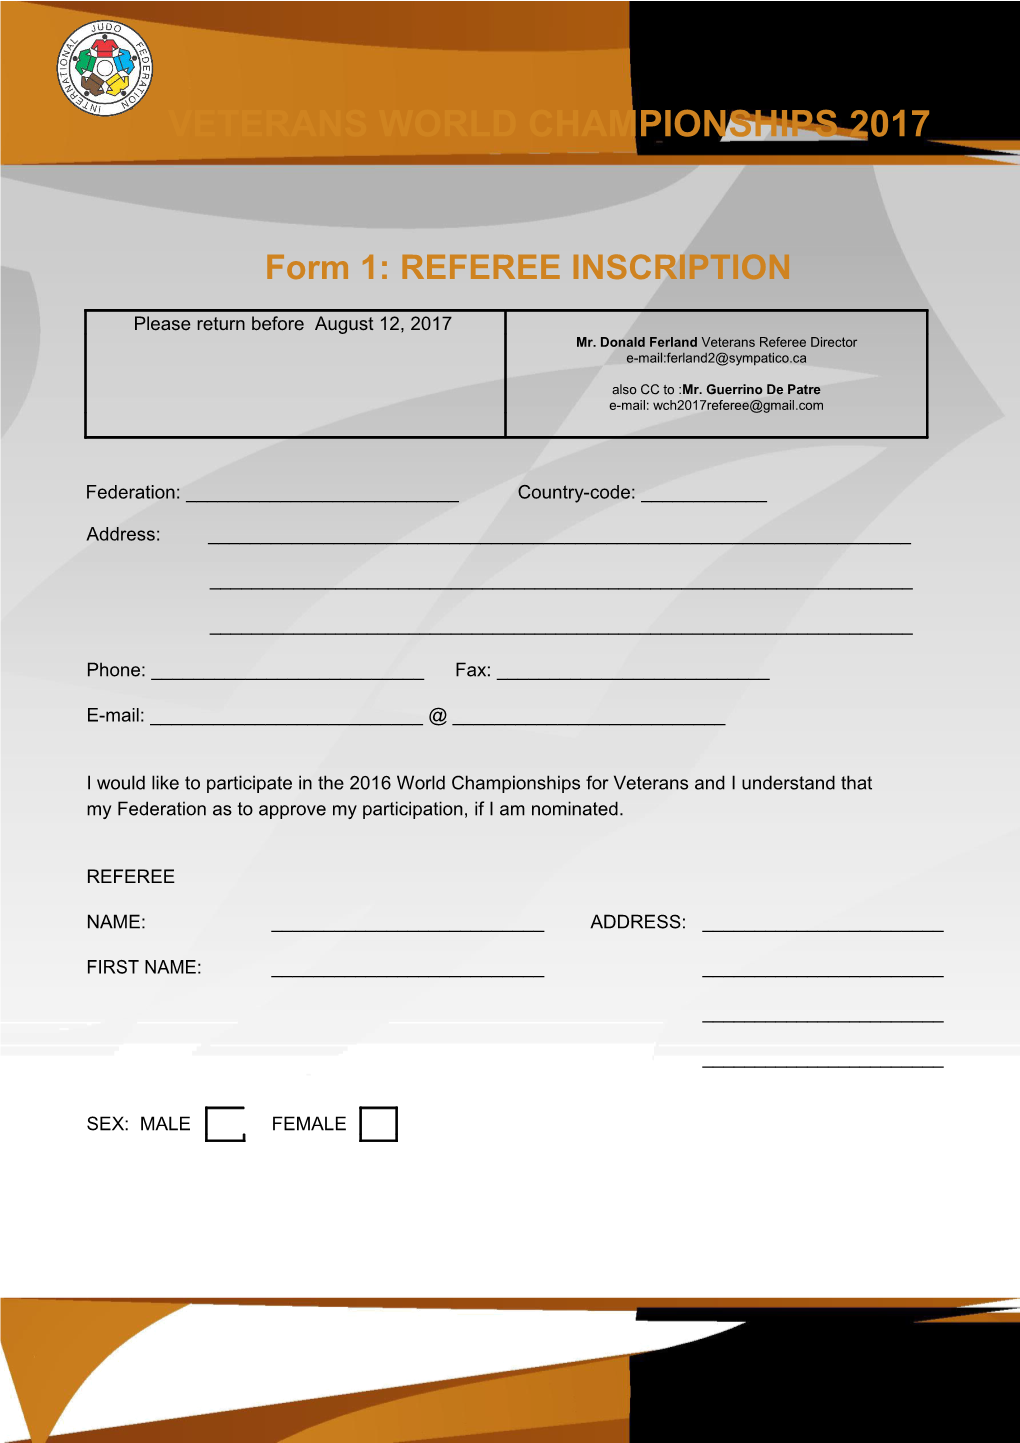 Form 1: REFEREE INSCRIPTION